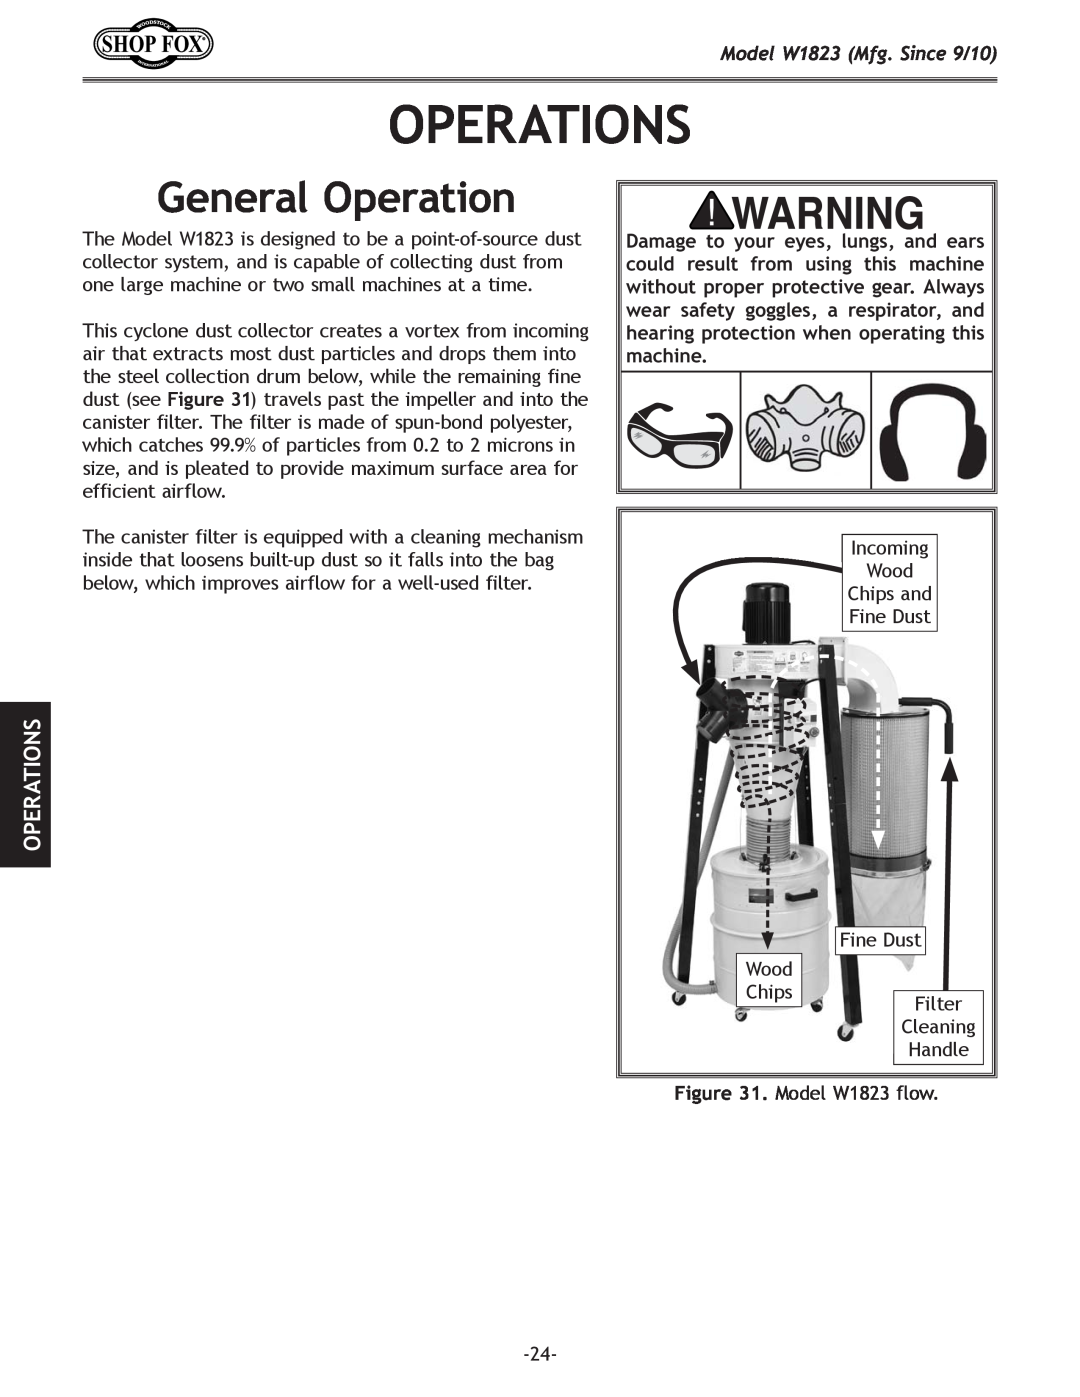 Woodstock manual Operations, General Operation, Model W1823 Mfg. Since 9/10 